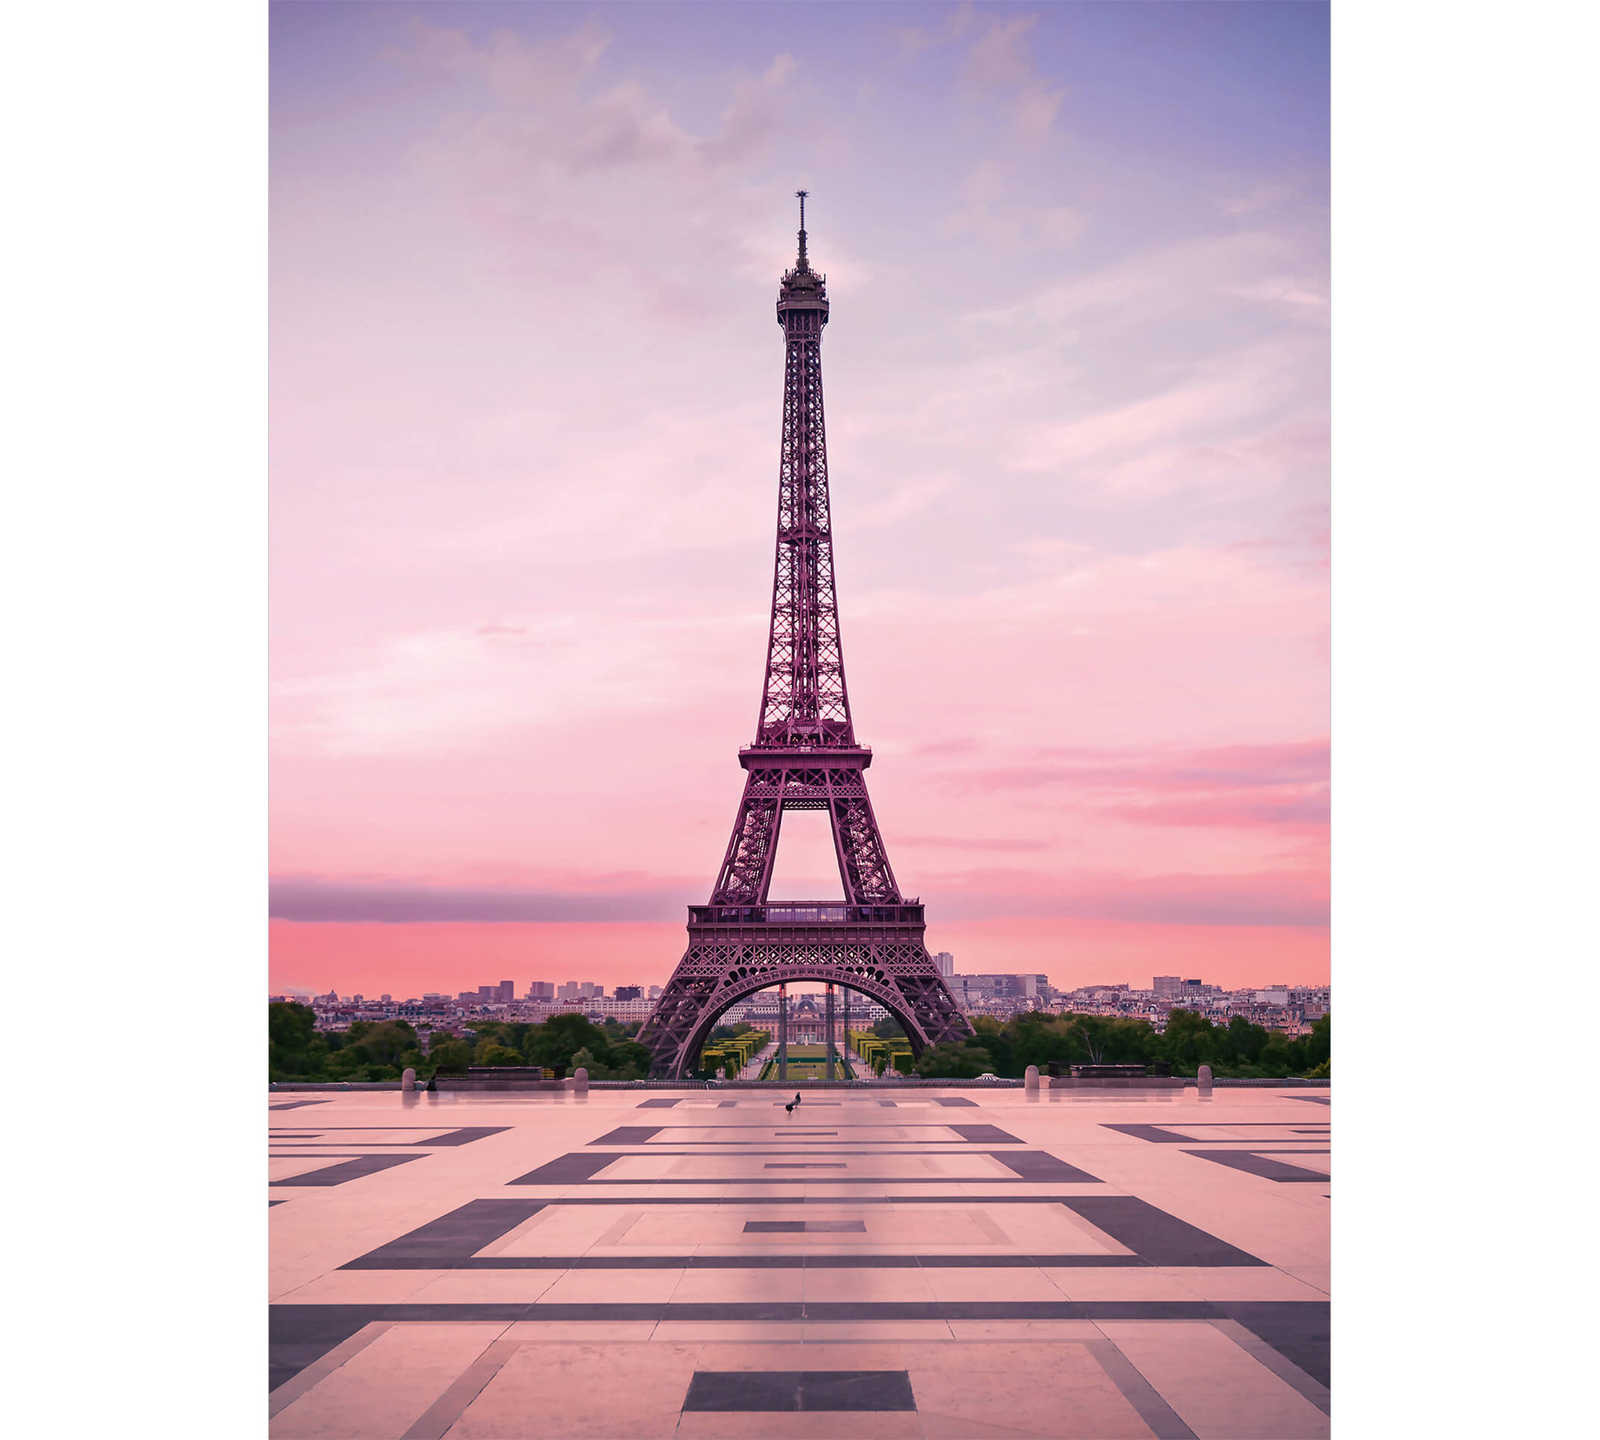         Eiffel Tower mural Paris at sunset
    